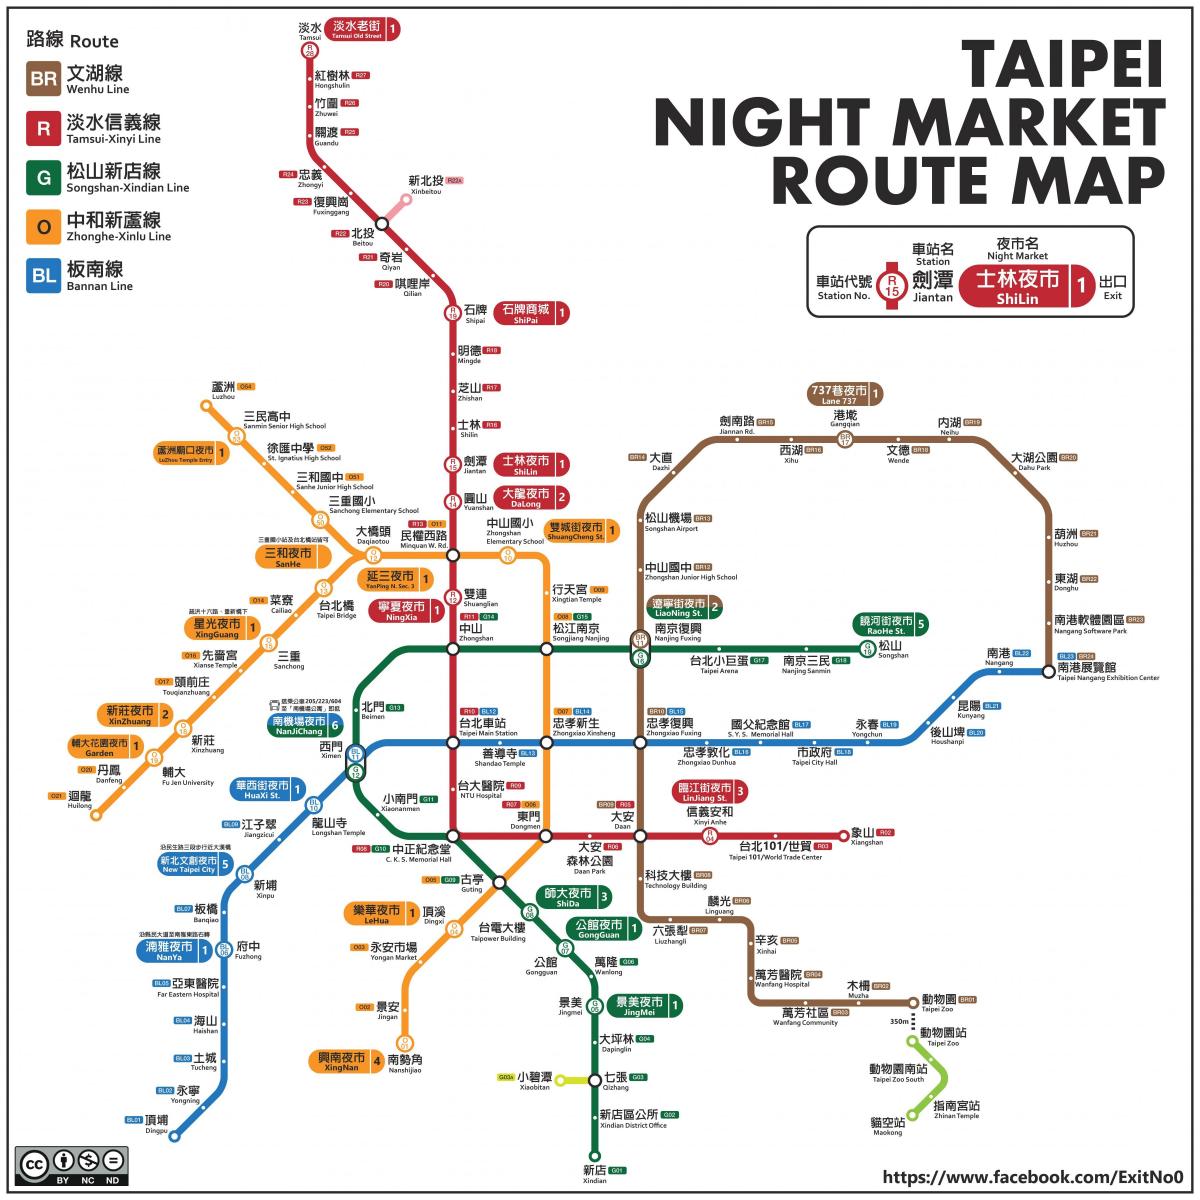 kaart van Taipei nag markte